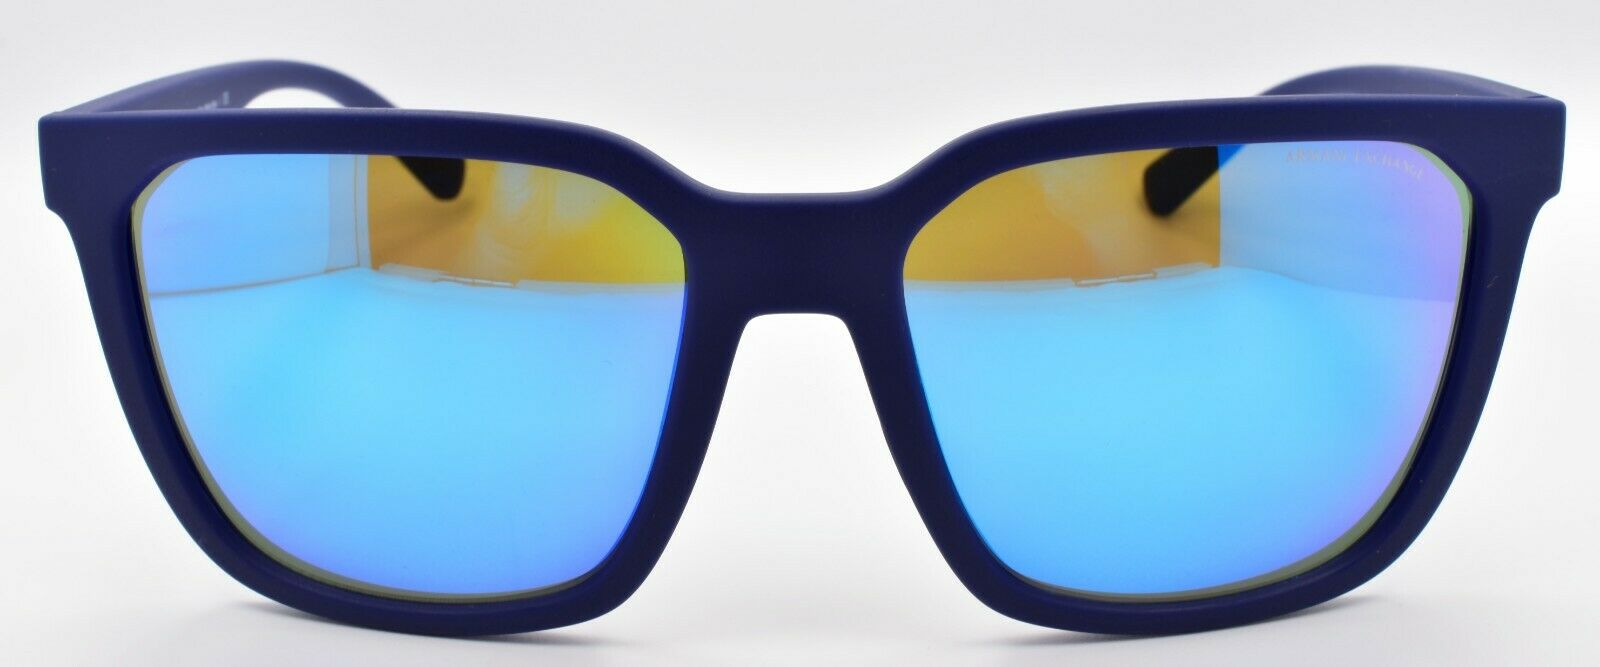 2-Armani Exchange AX4108S 818125 Sunglasses 57-18-145 Matte Blue / Mirror Blue-7895653216877-IKSpecs